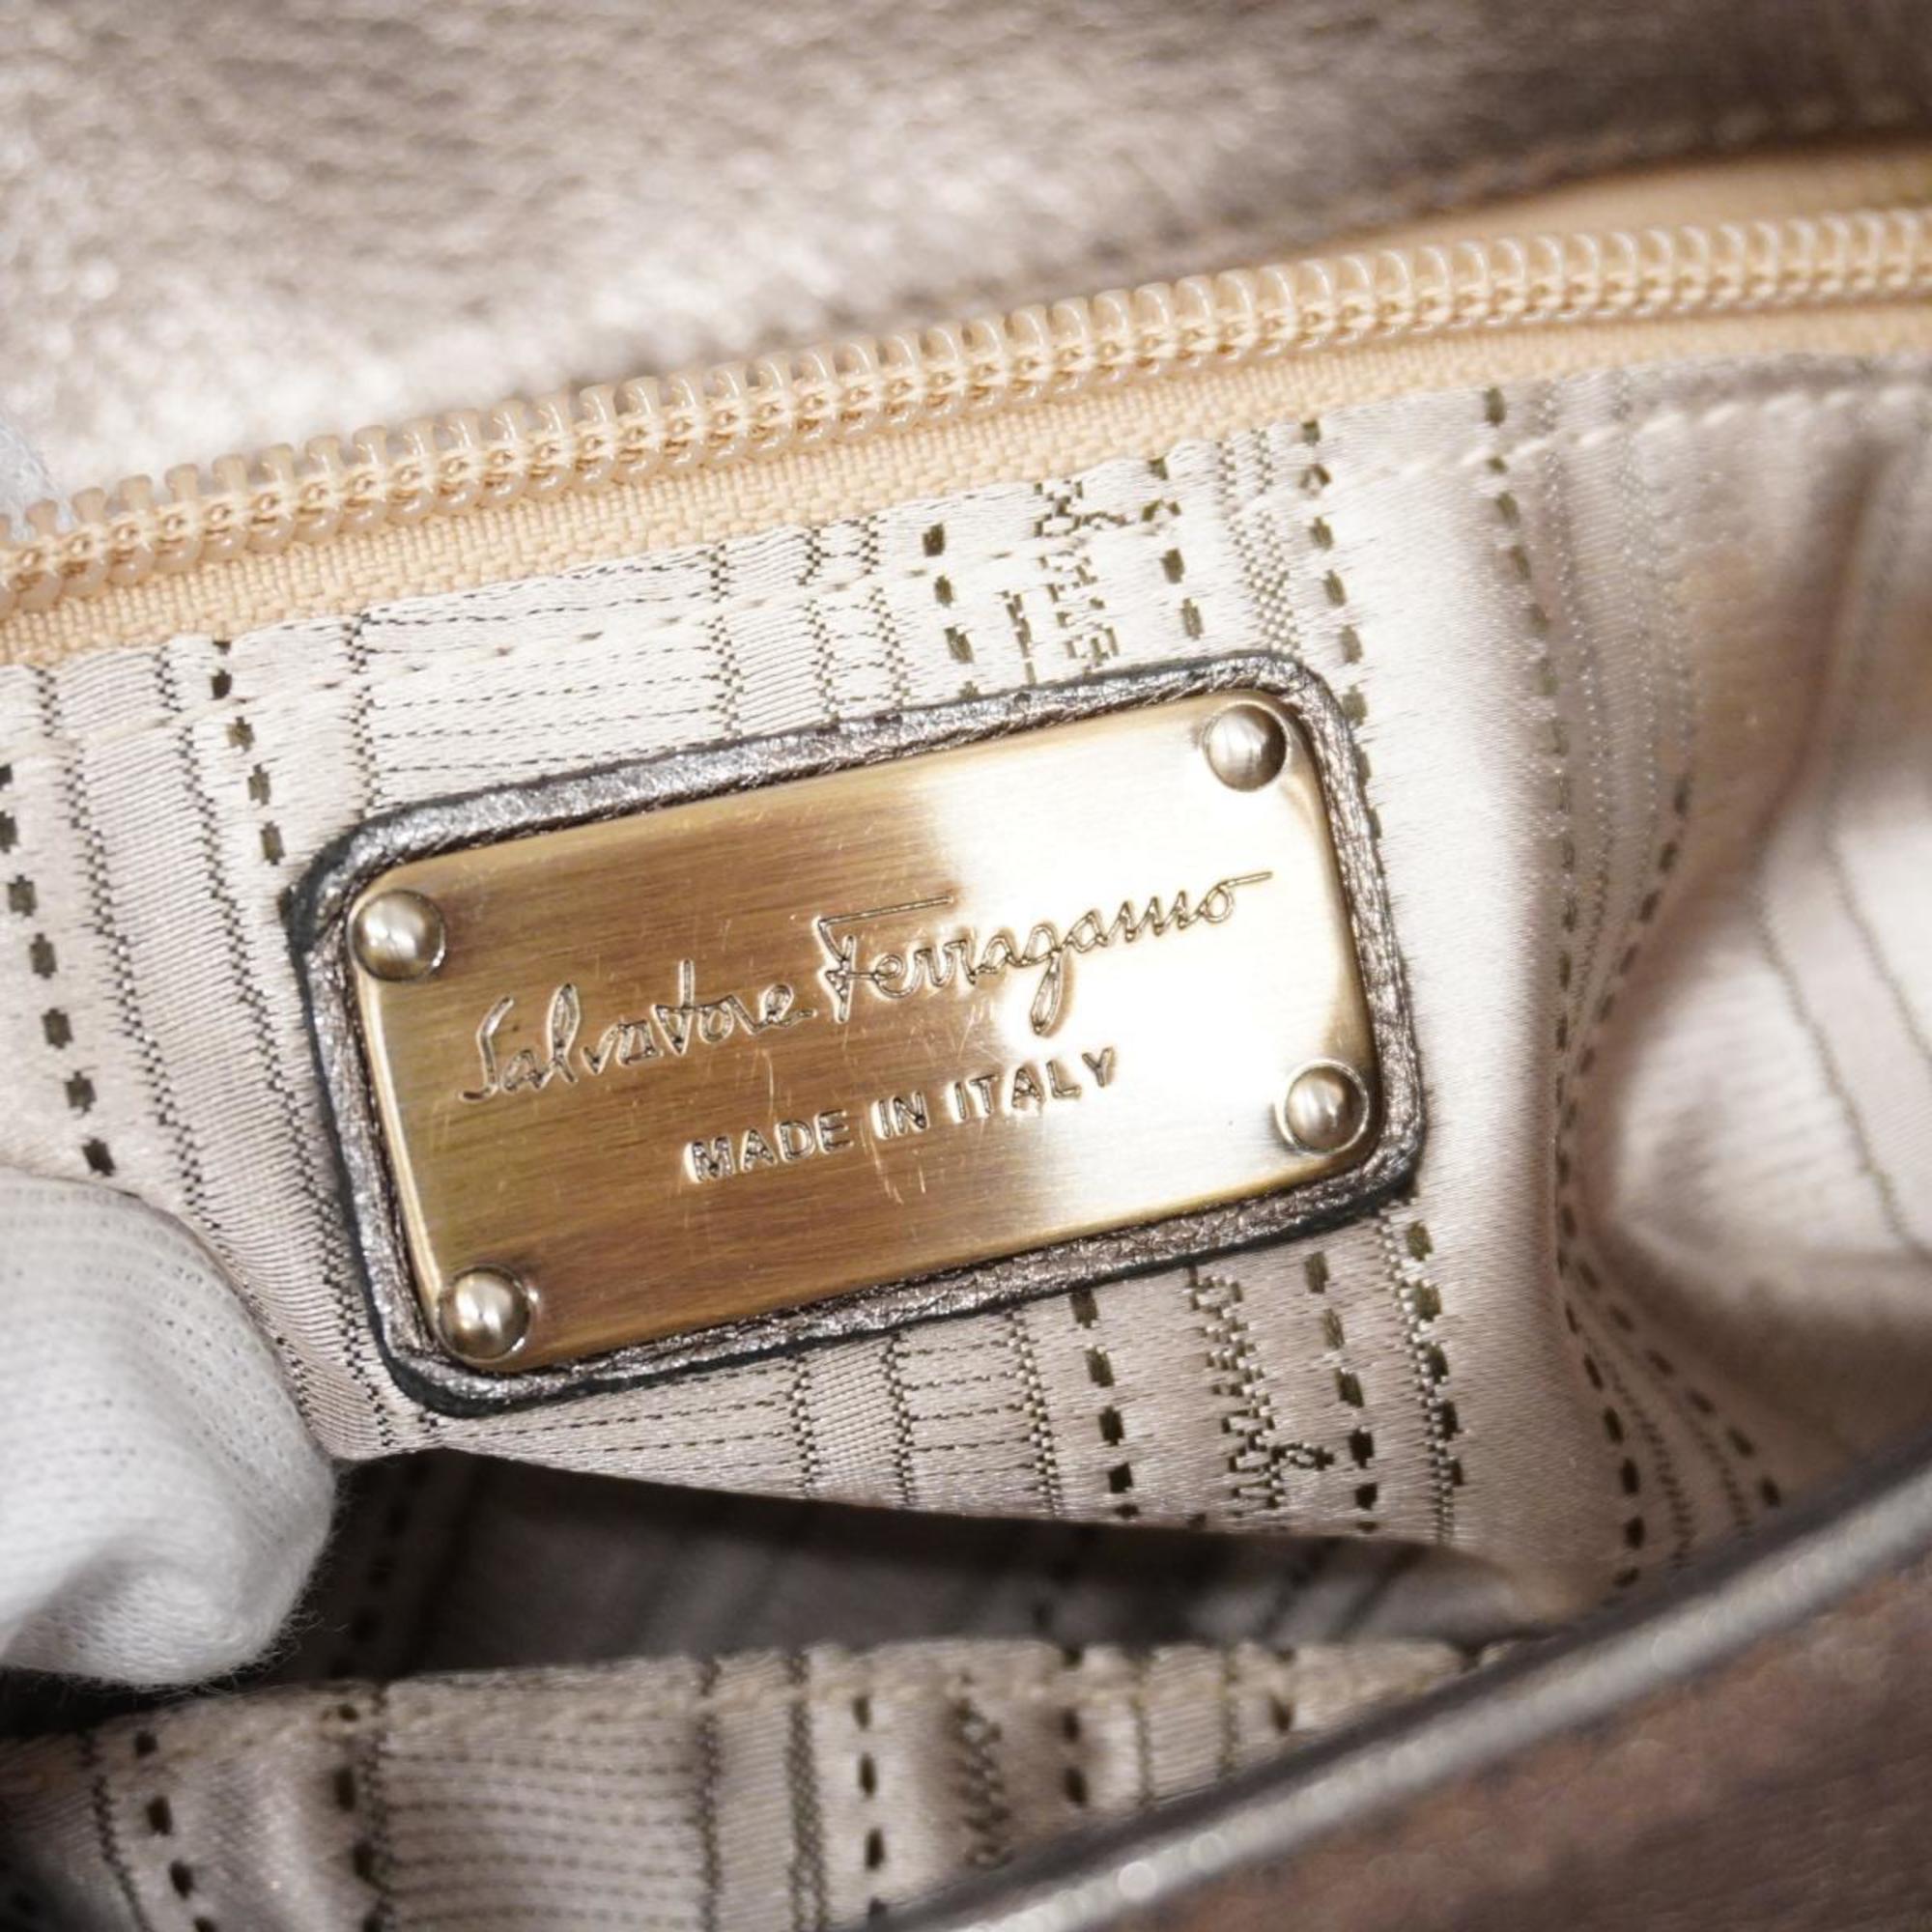 Salvatore Ferragamo Shoulder Bag Gancini Leather Grey Champagne Women's